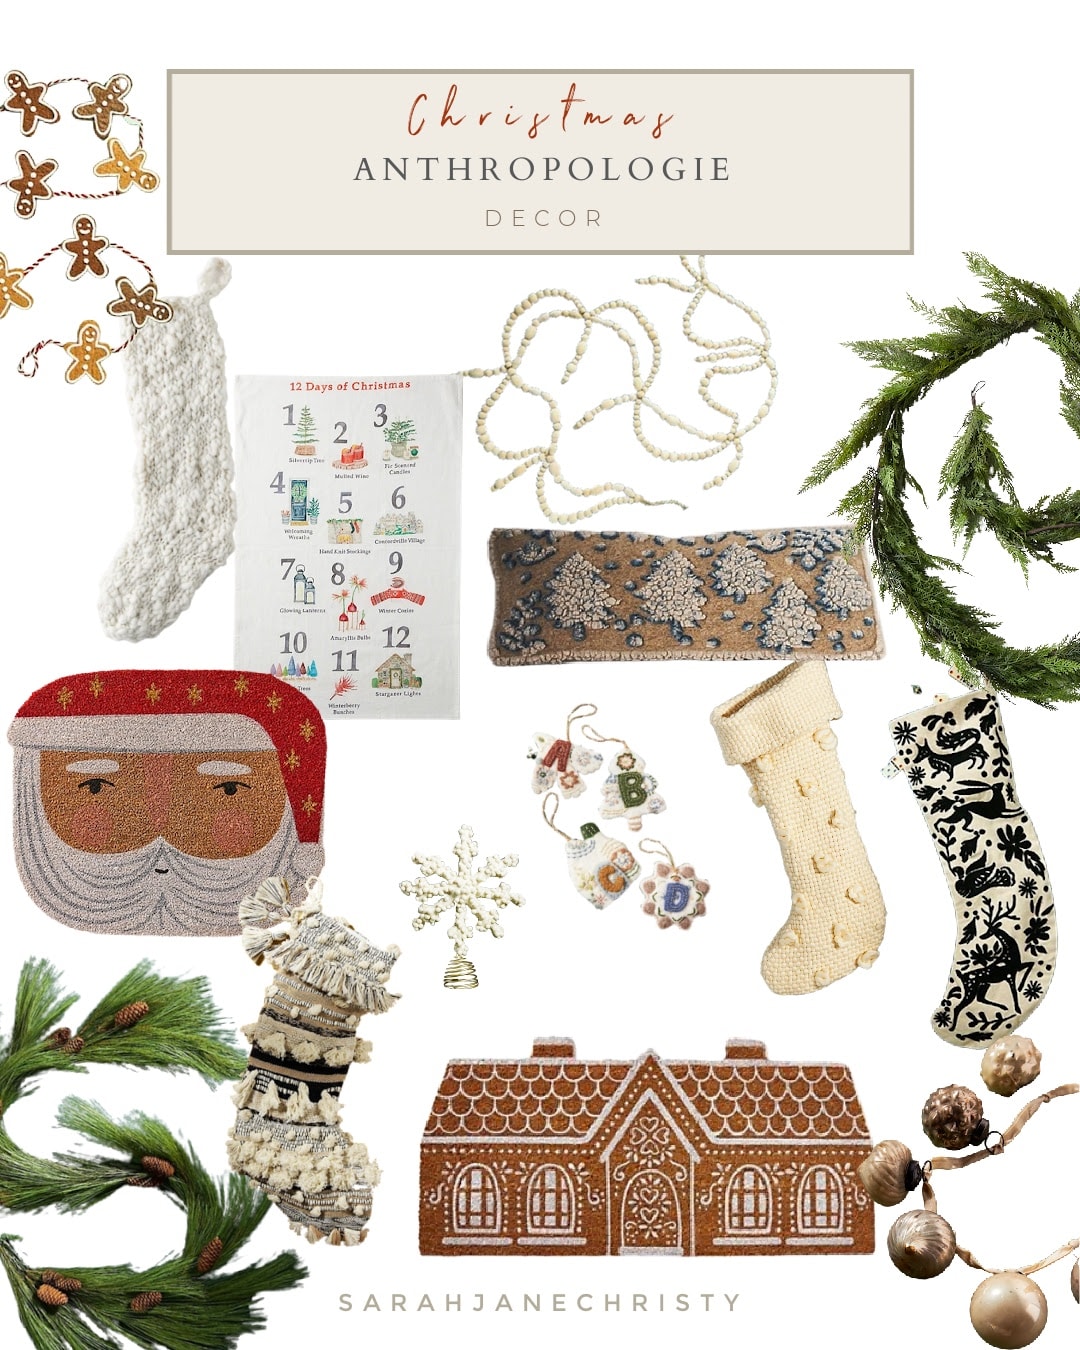 Anthropologie Christmas decor online